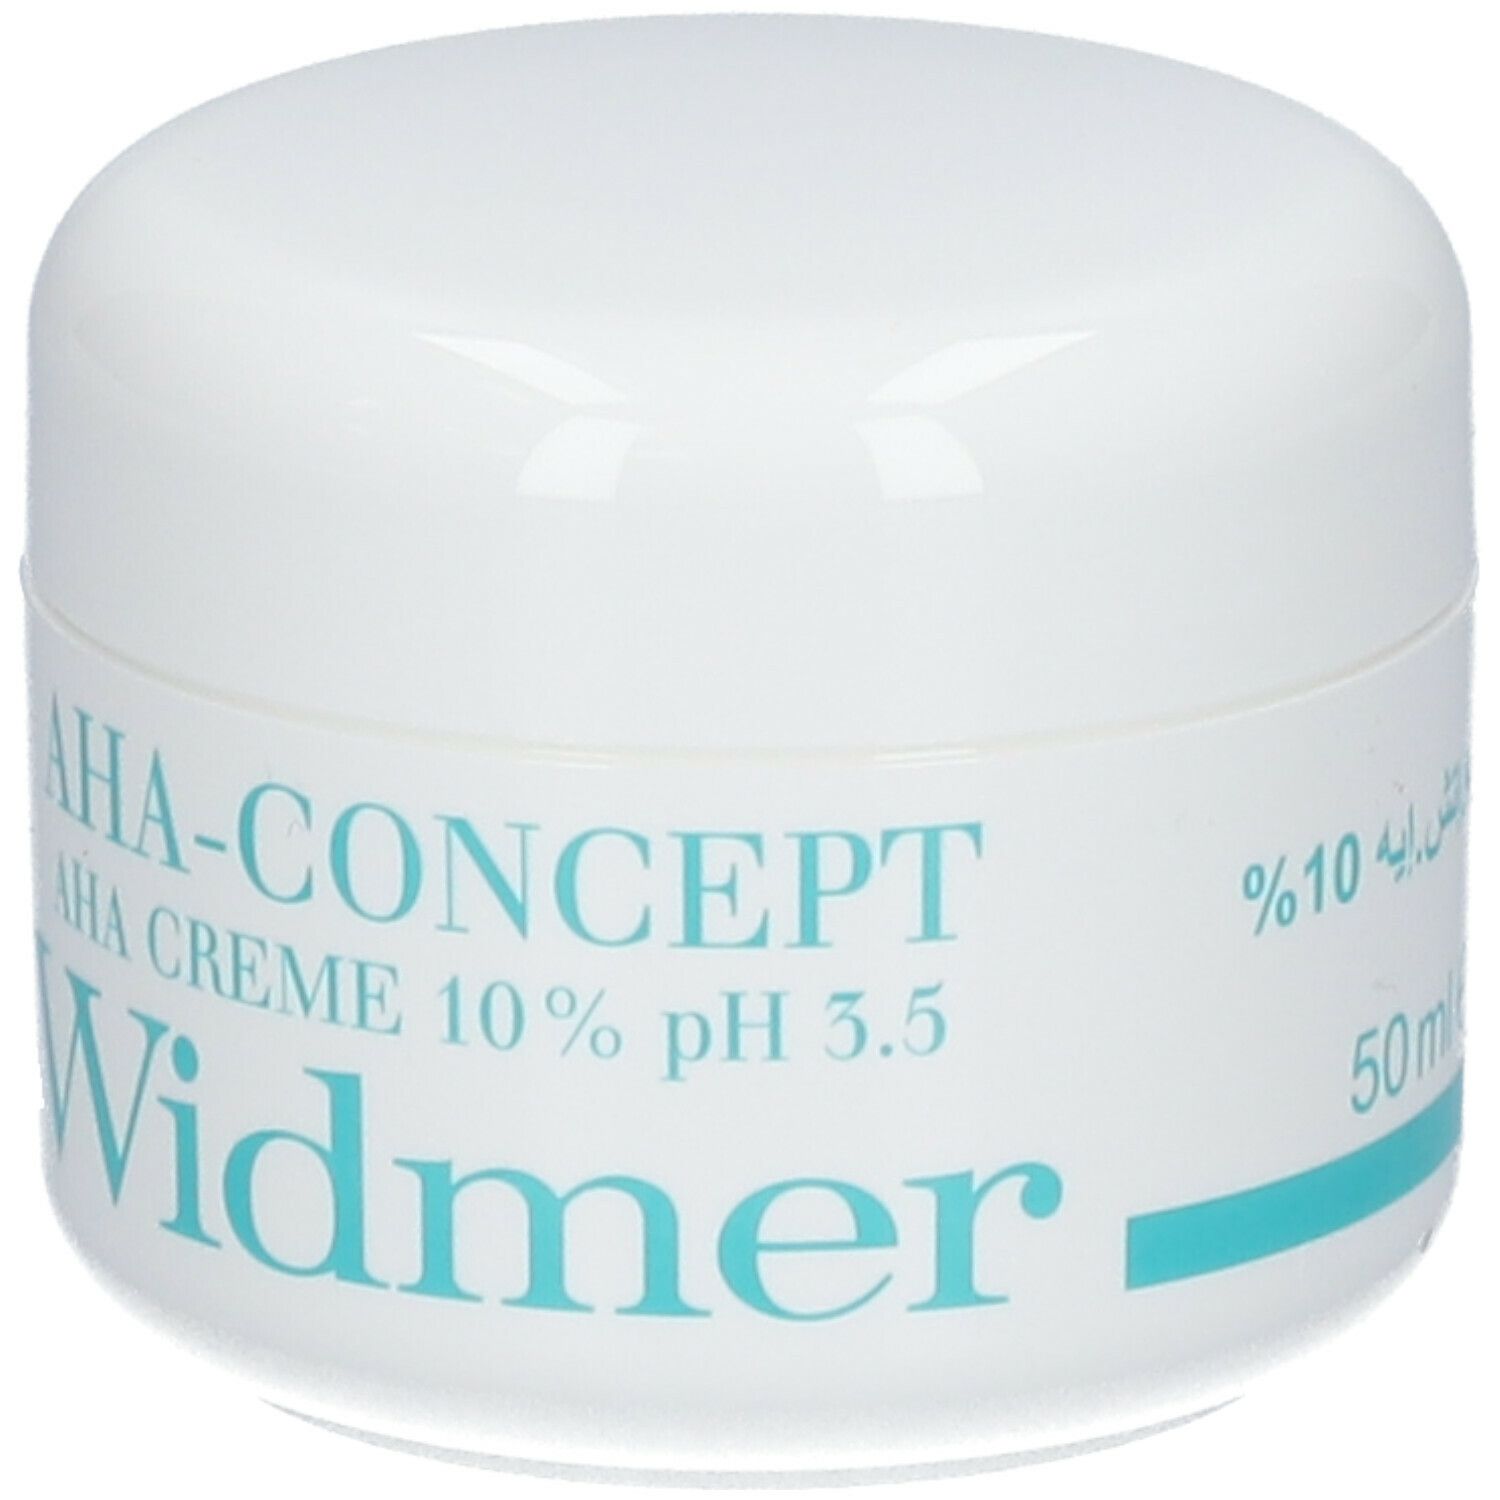 Louis Widmer AHA-Concept AHA-Creme 10%